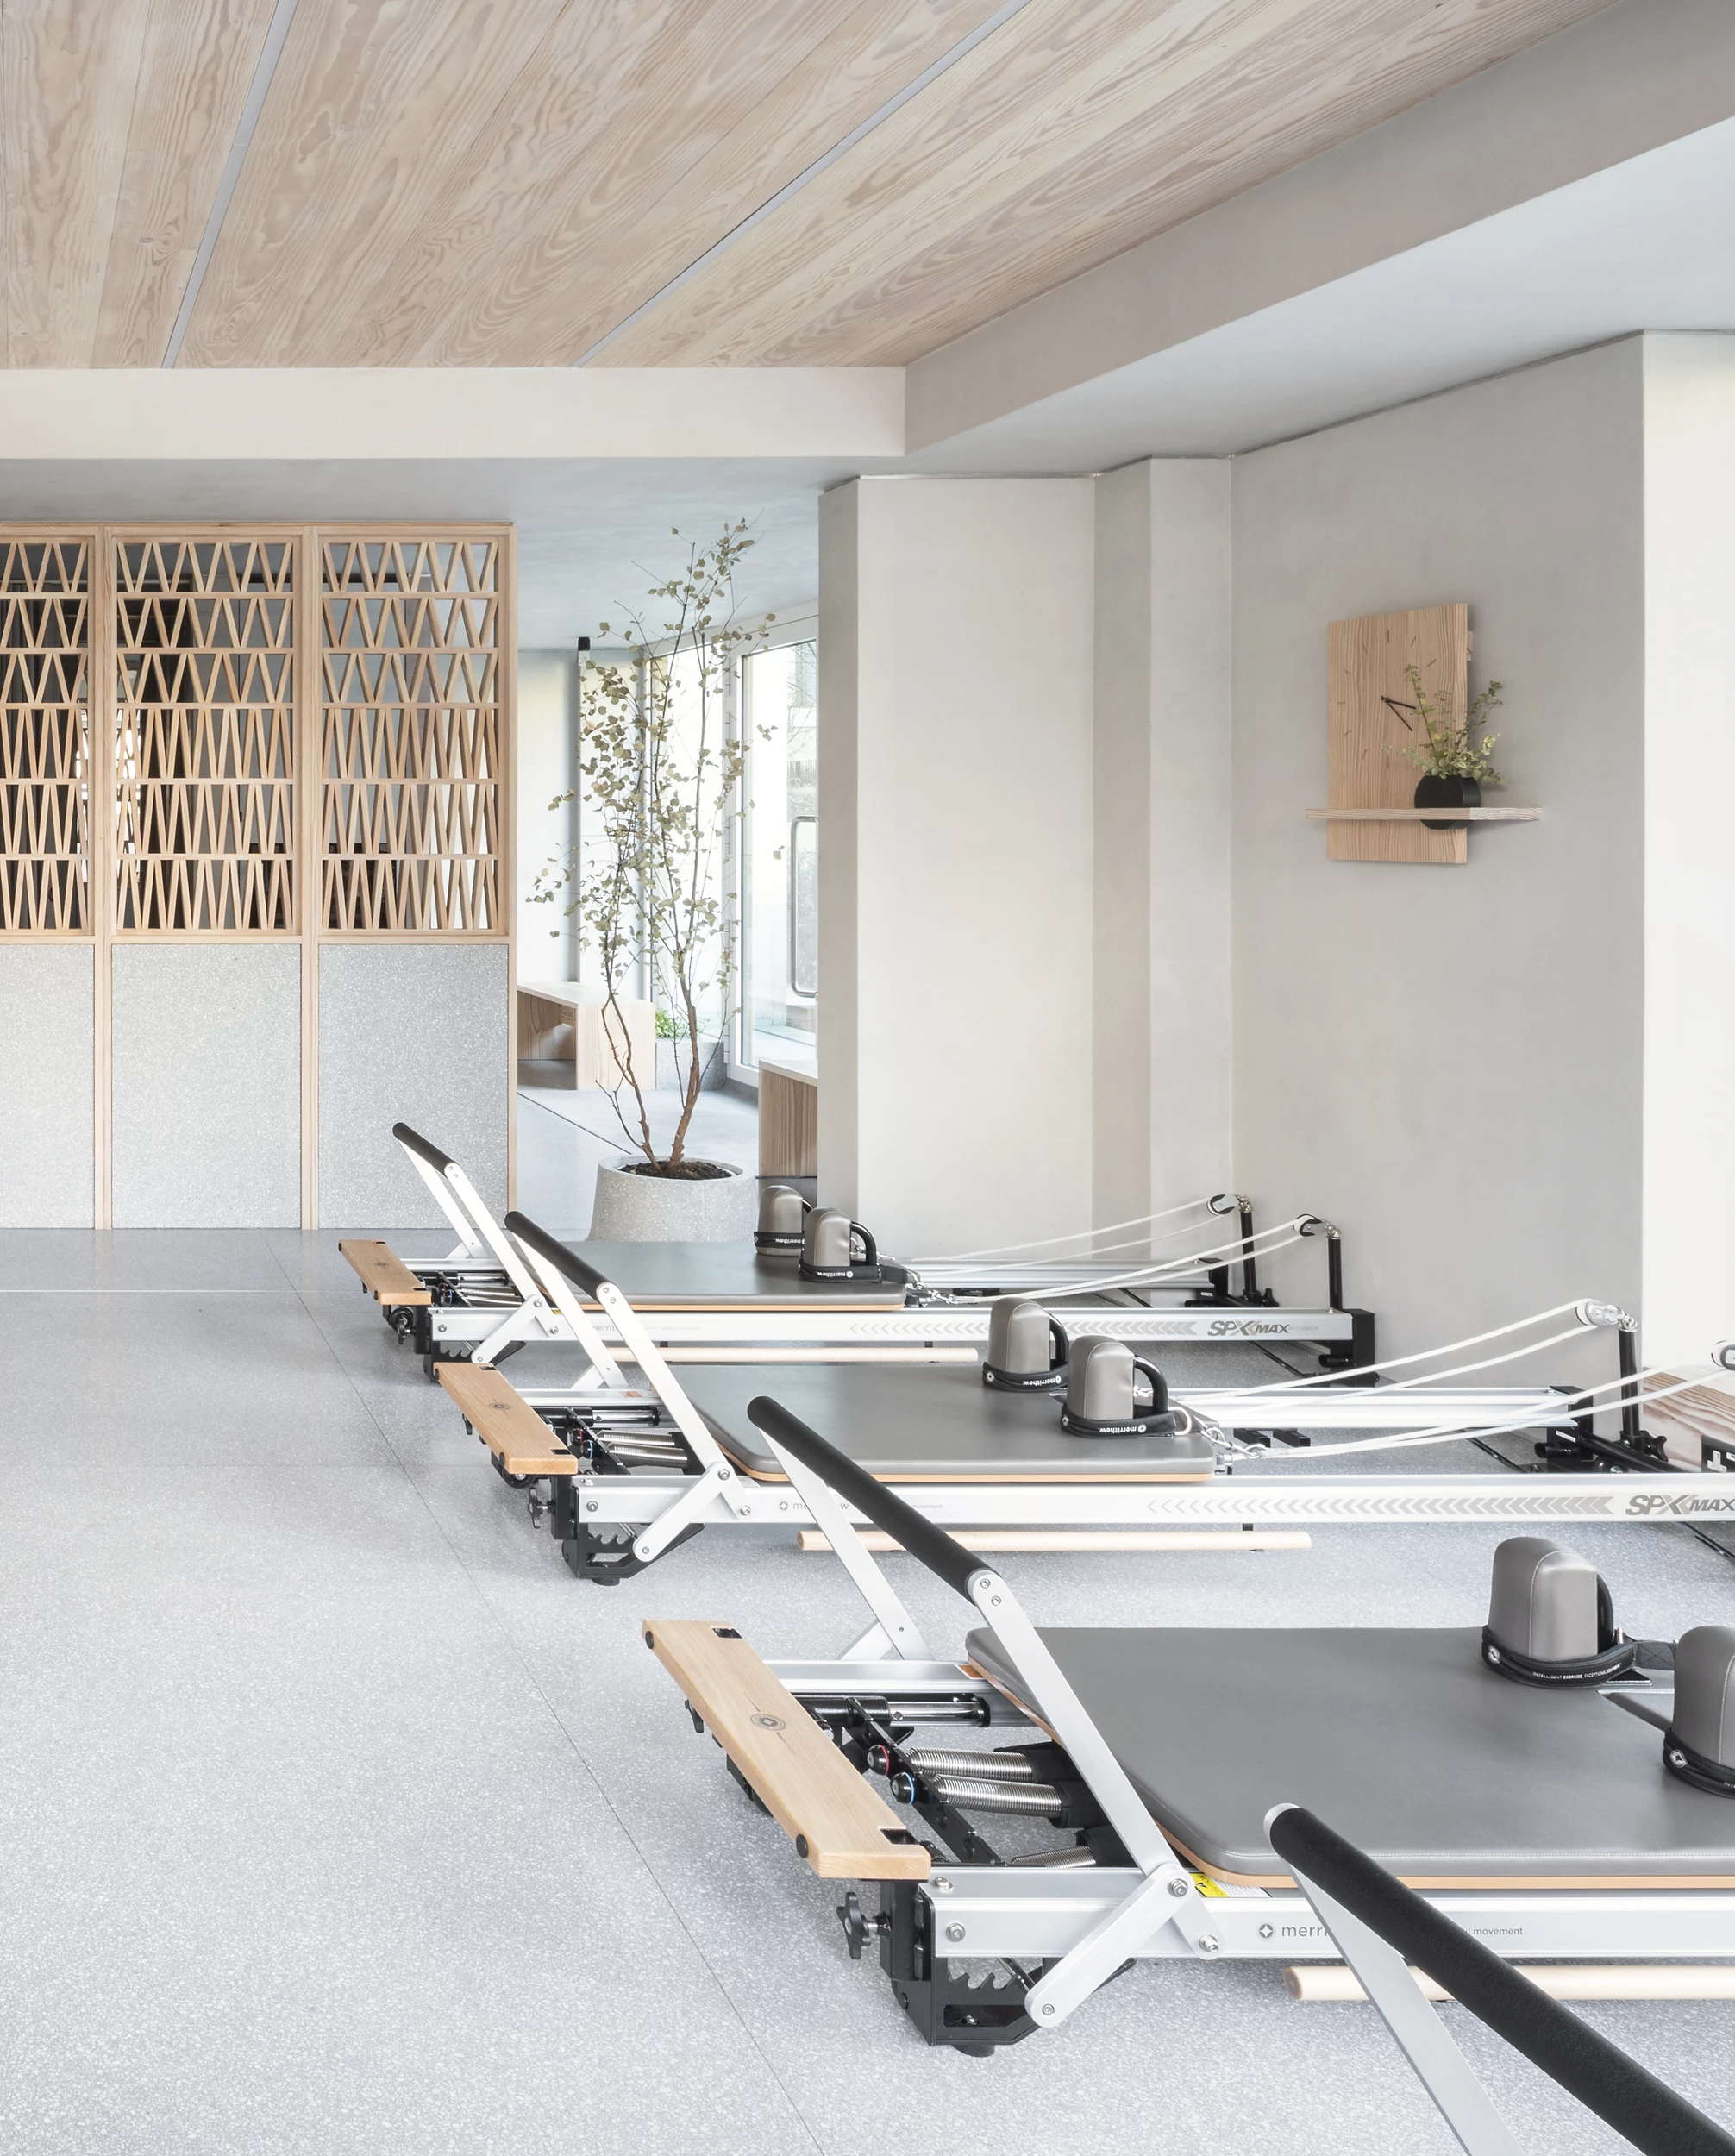 Core Kensington pilates center in London